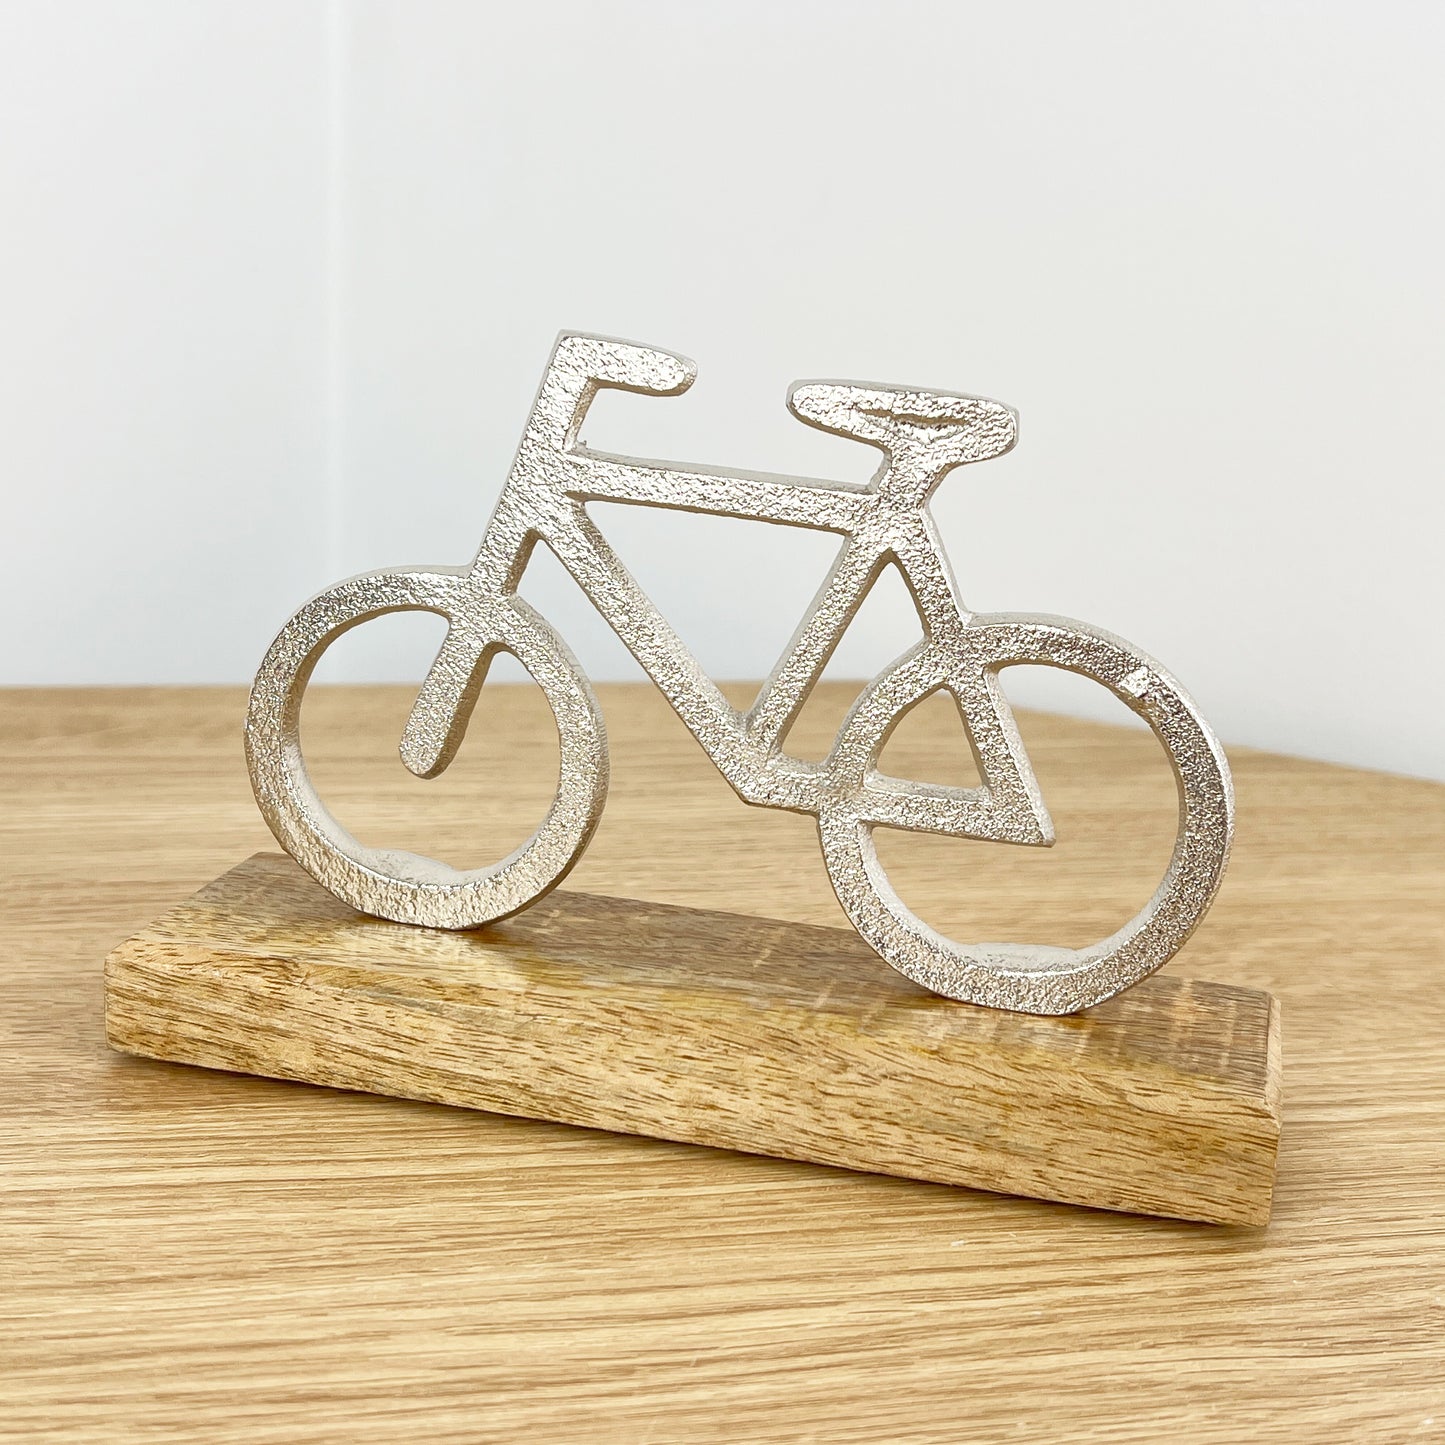 Small Bike on Wood Ornament